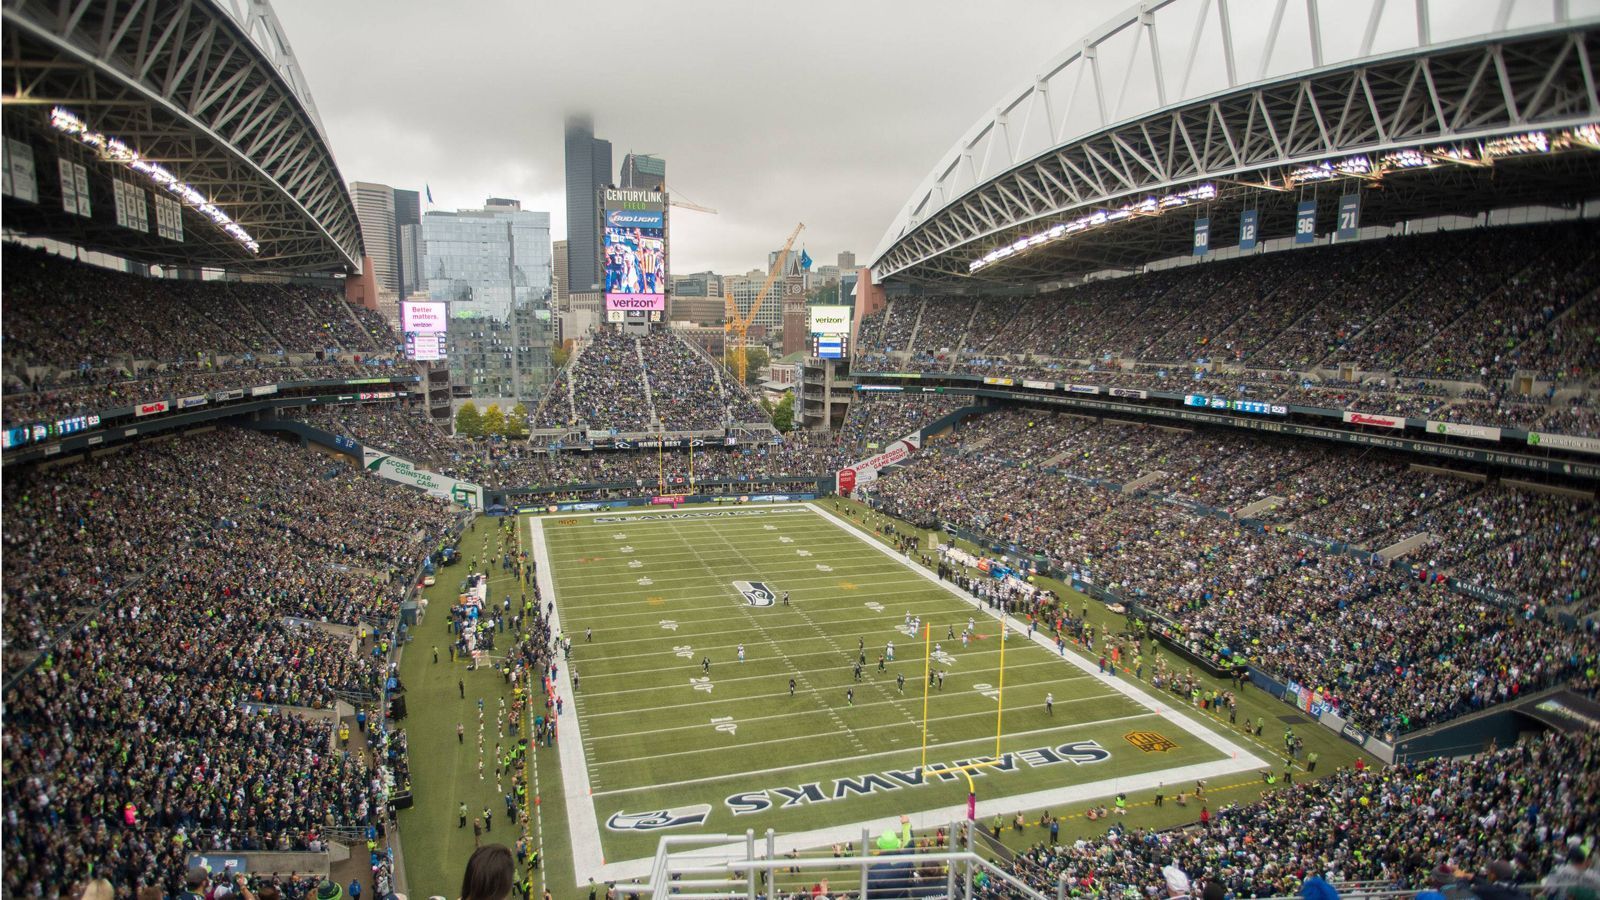 
                <strong>2. Platz: CenturyLink Field, Seattle</strong><br>
                Heimstätte der Seattle Seahawks (NFL)Höchstgemessene Lautstärke: 137.6 dB
              